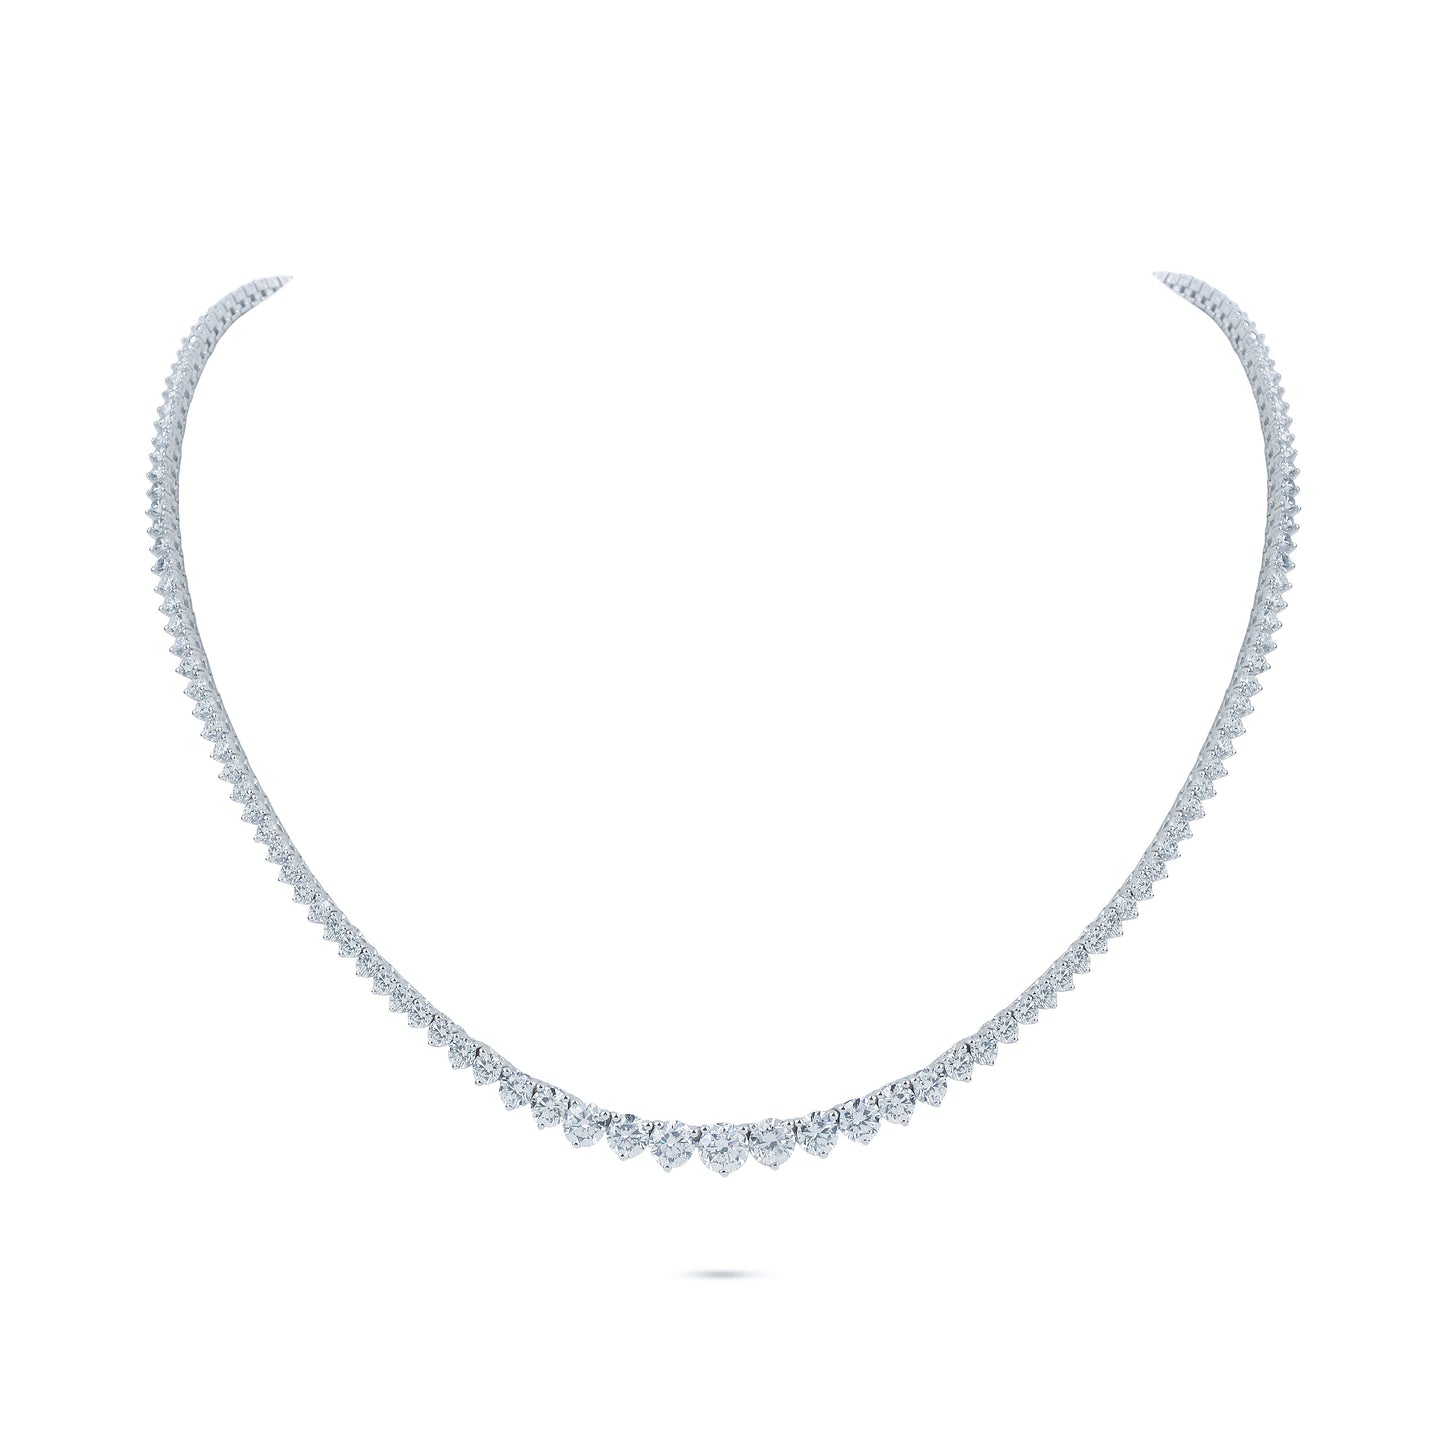 13.01 Carats Diamond Tennis Necklace